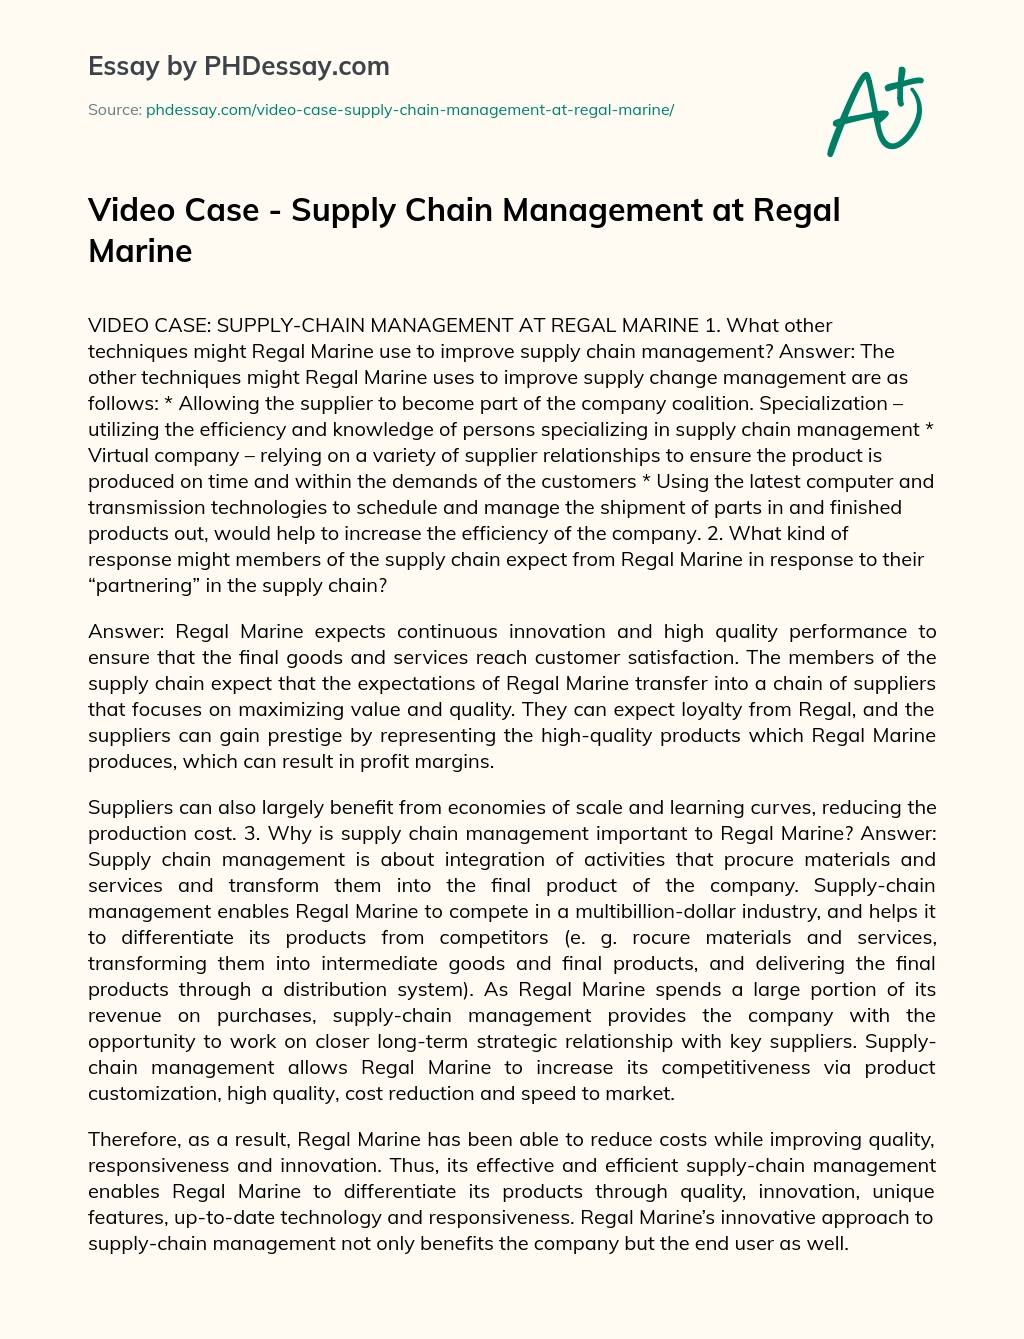 Video Case – Supply Chain Management at Regal Marine essay